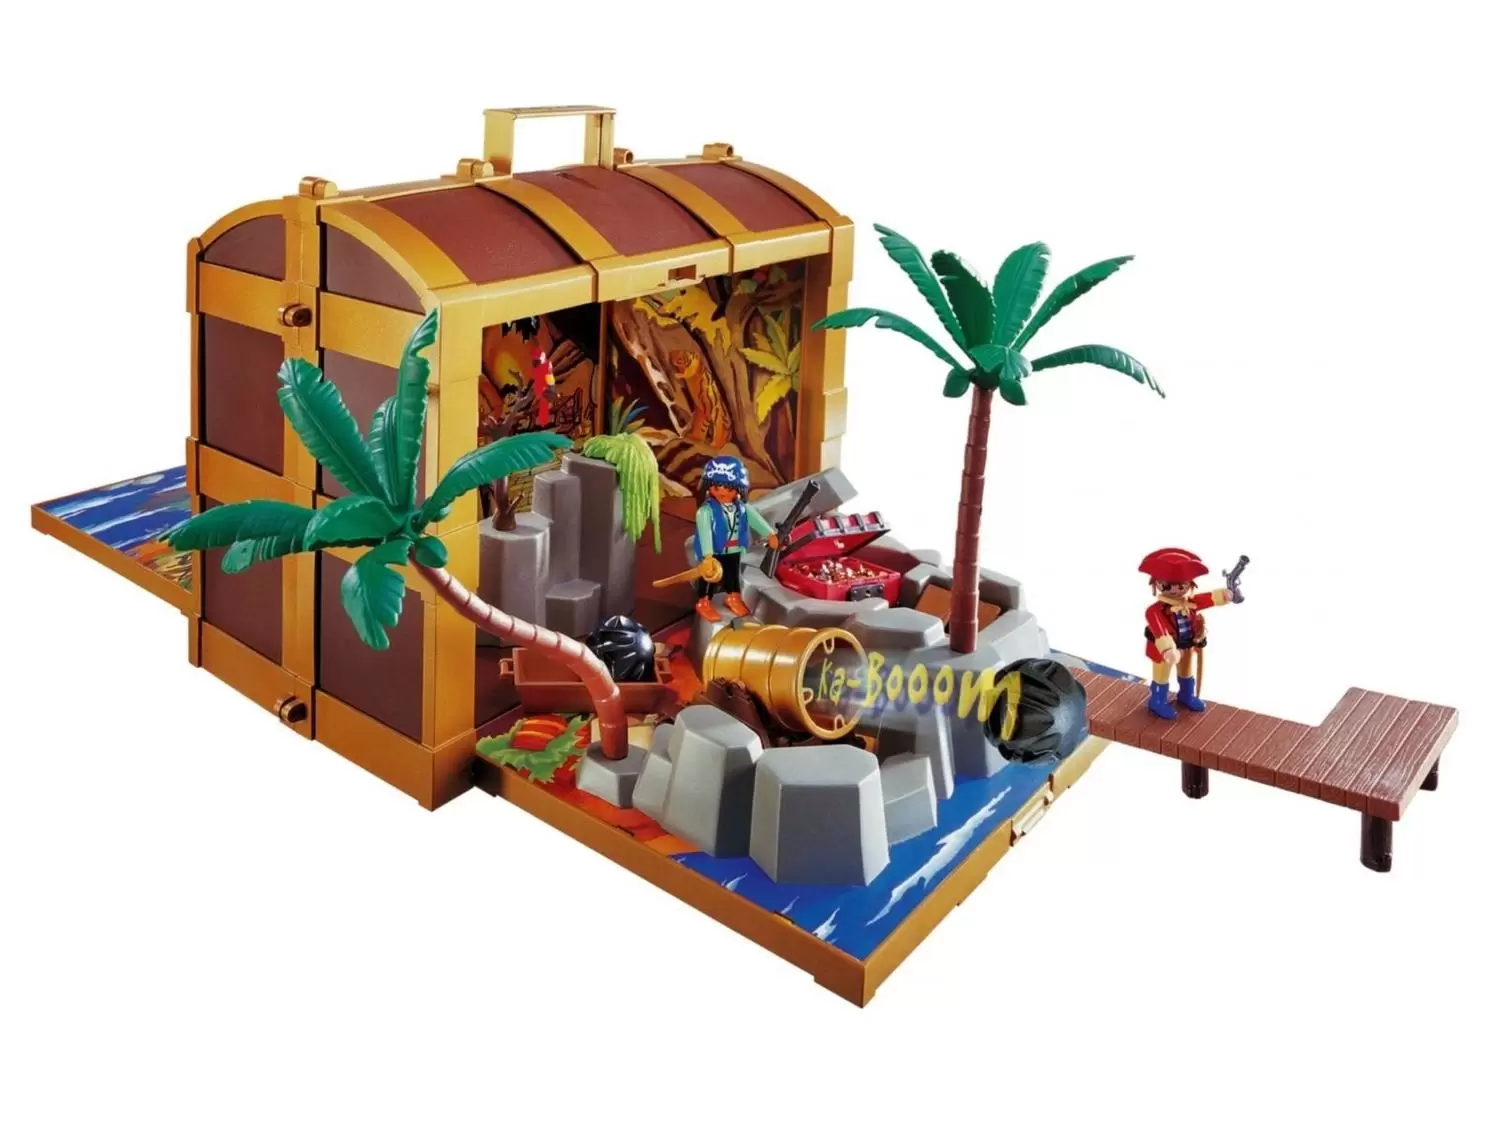 Pirate treasure chest - Pirate Playmobil 4432